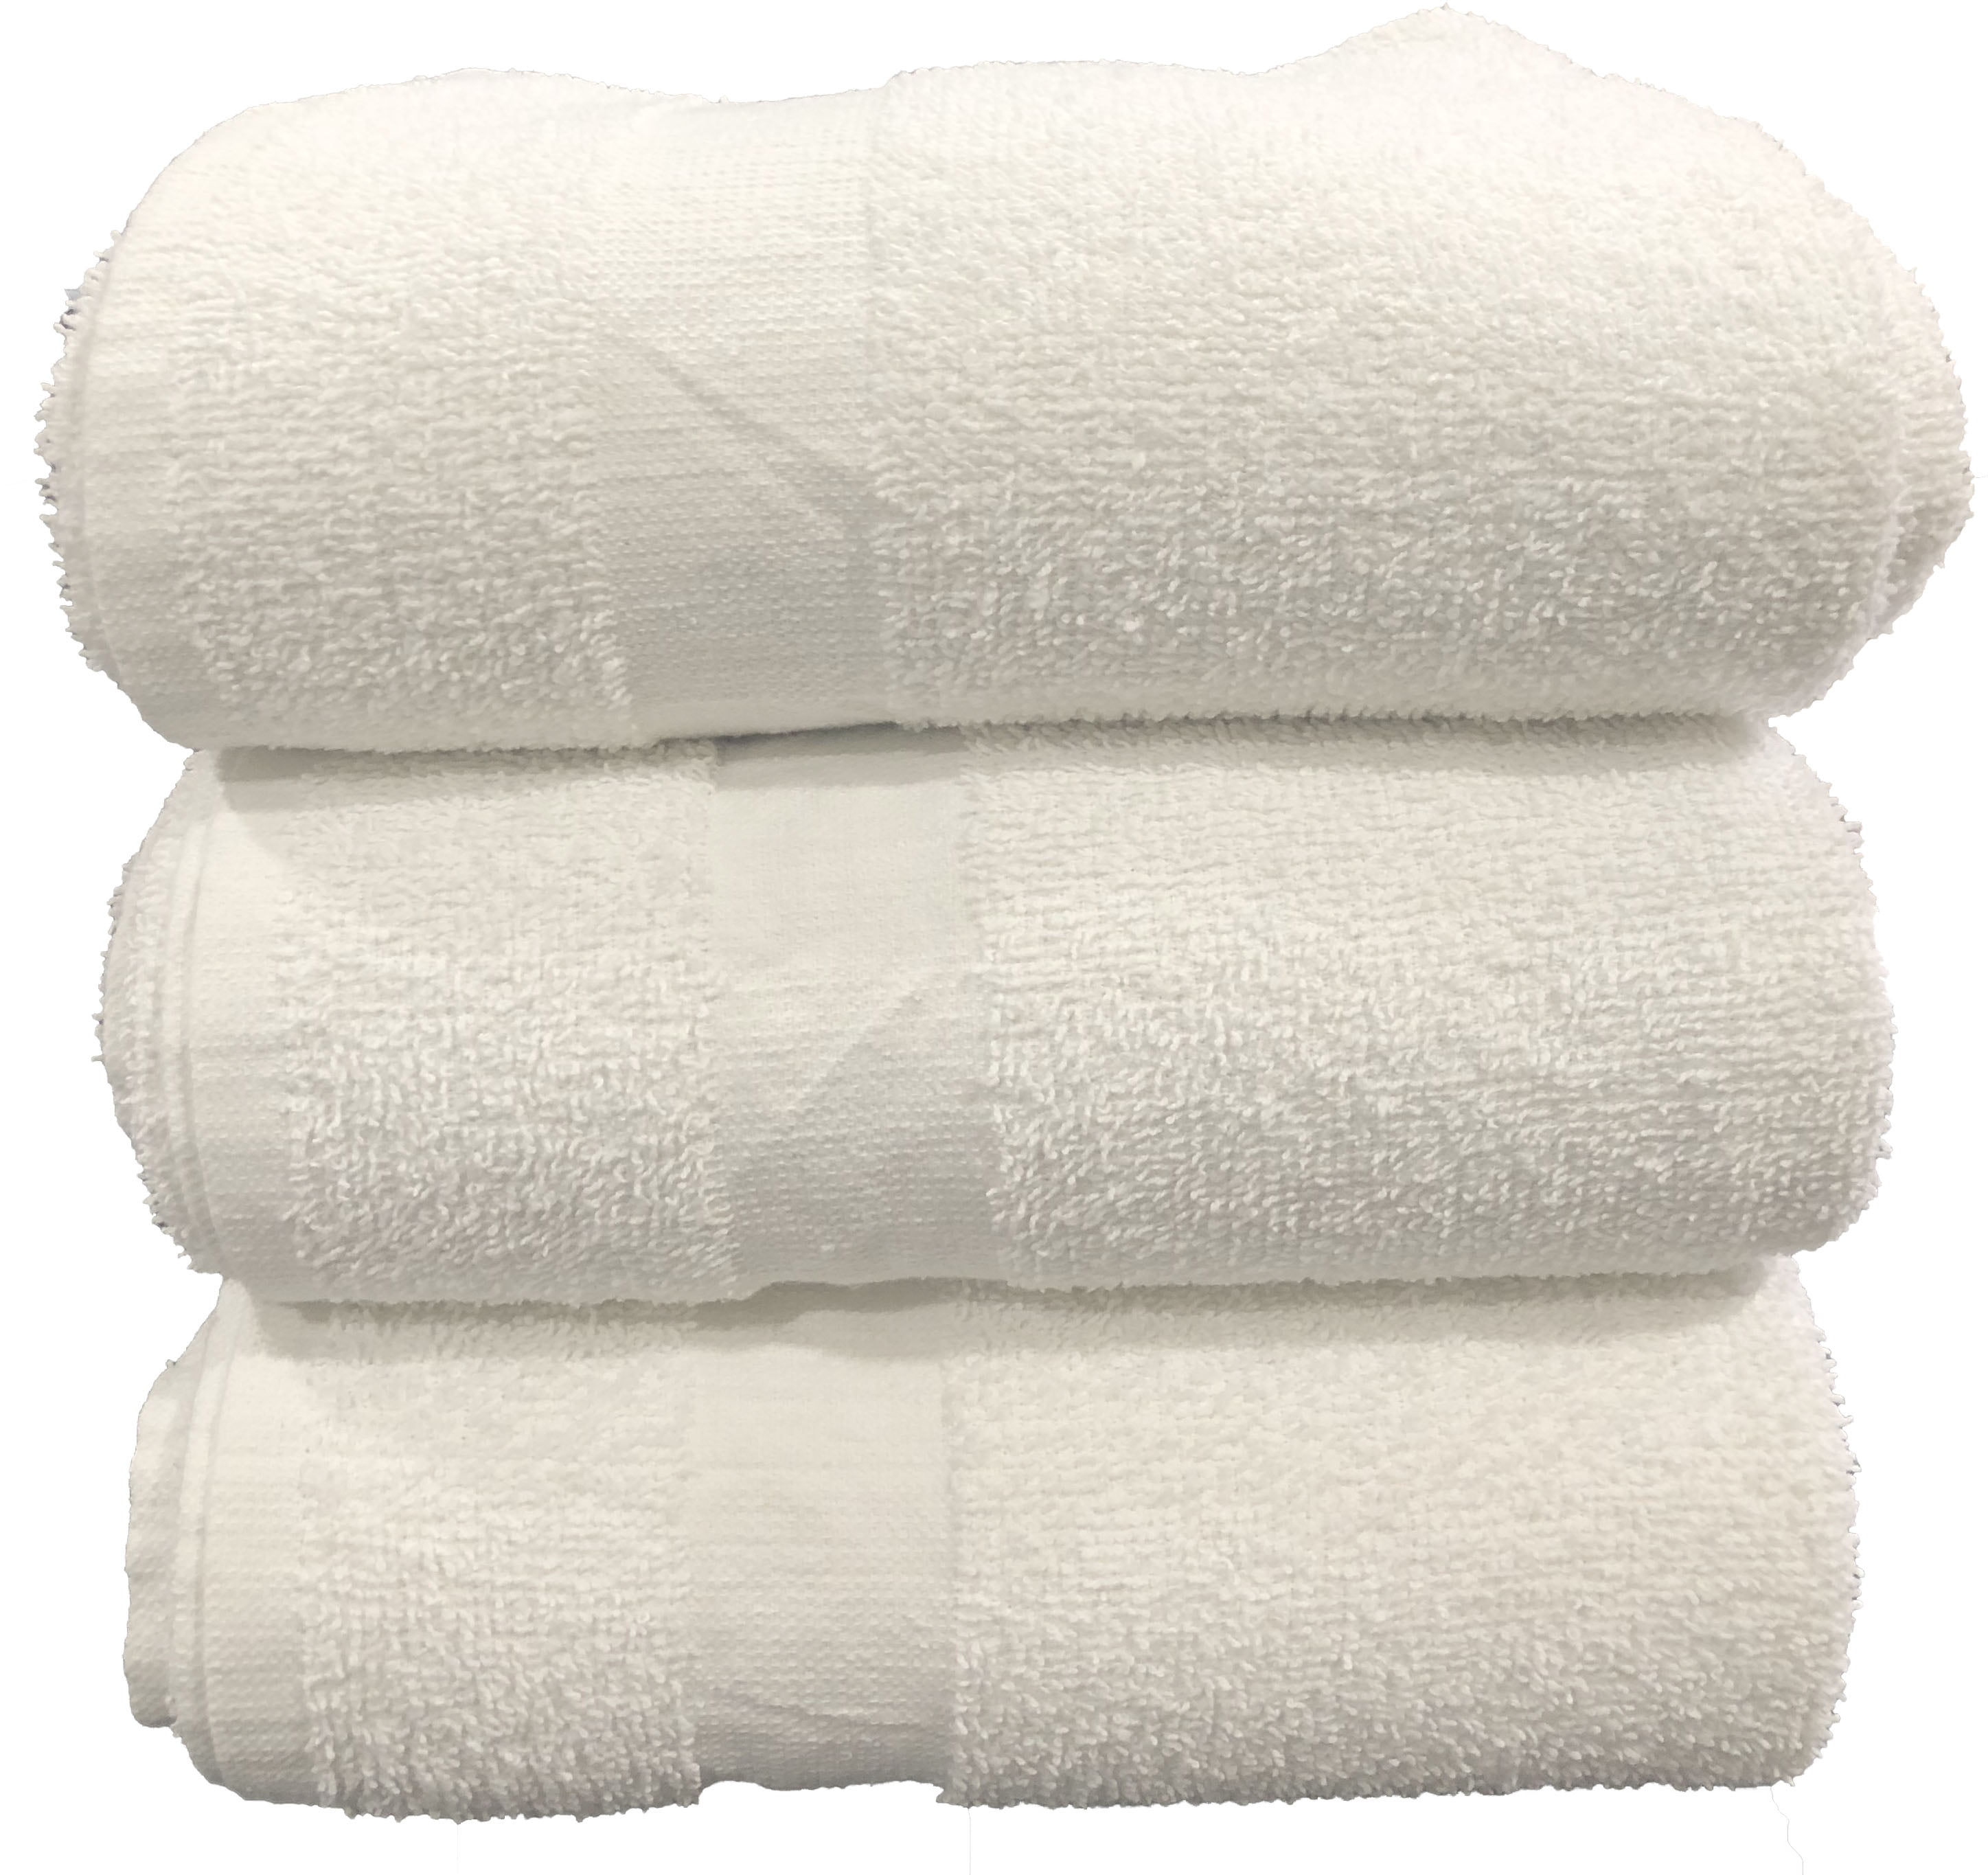 8 white cotton hotel bath towels large 27x54 *premium* dobbby border 17# dozen 